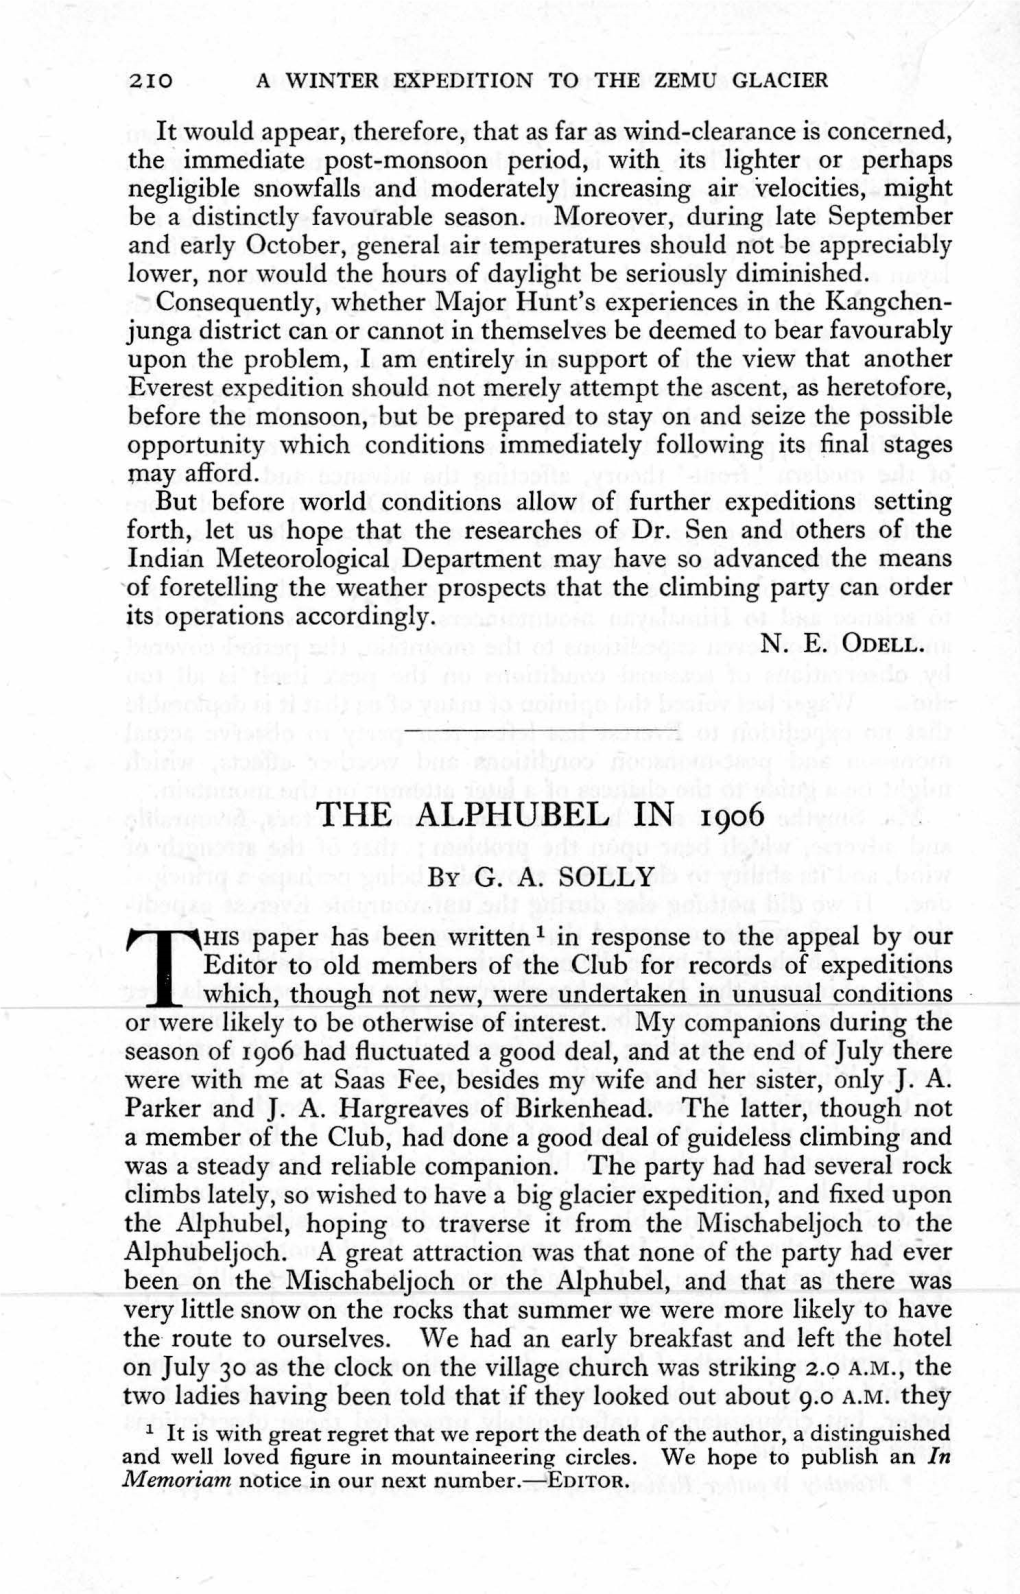 The Alphubel in 1906